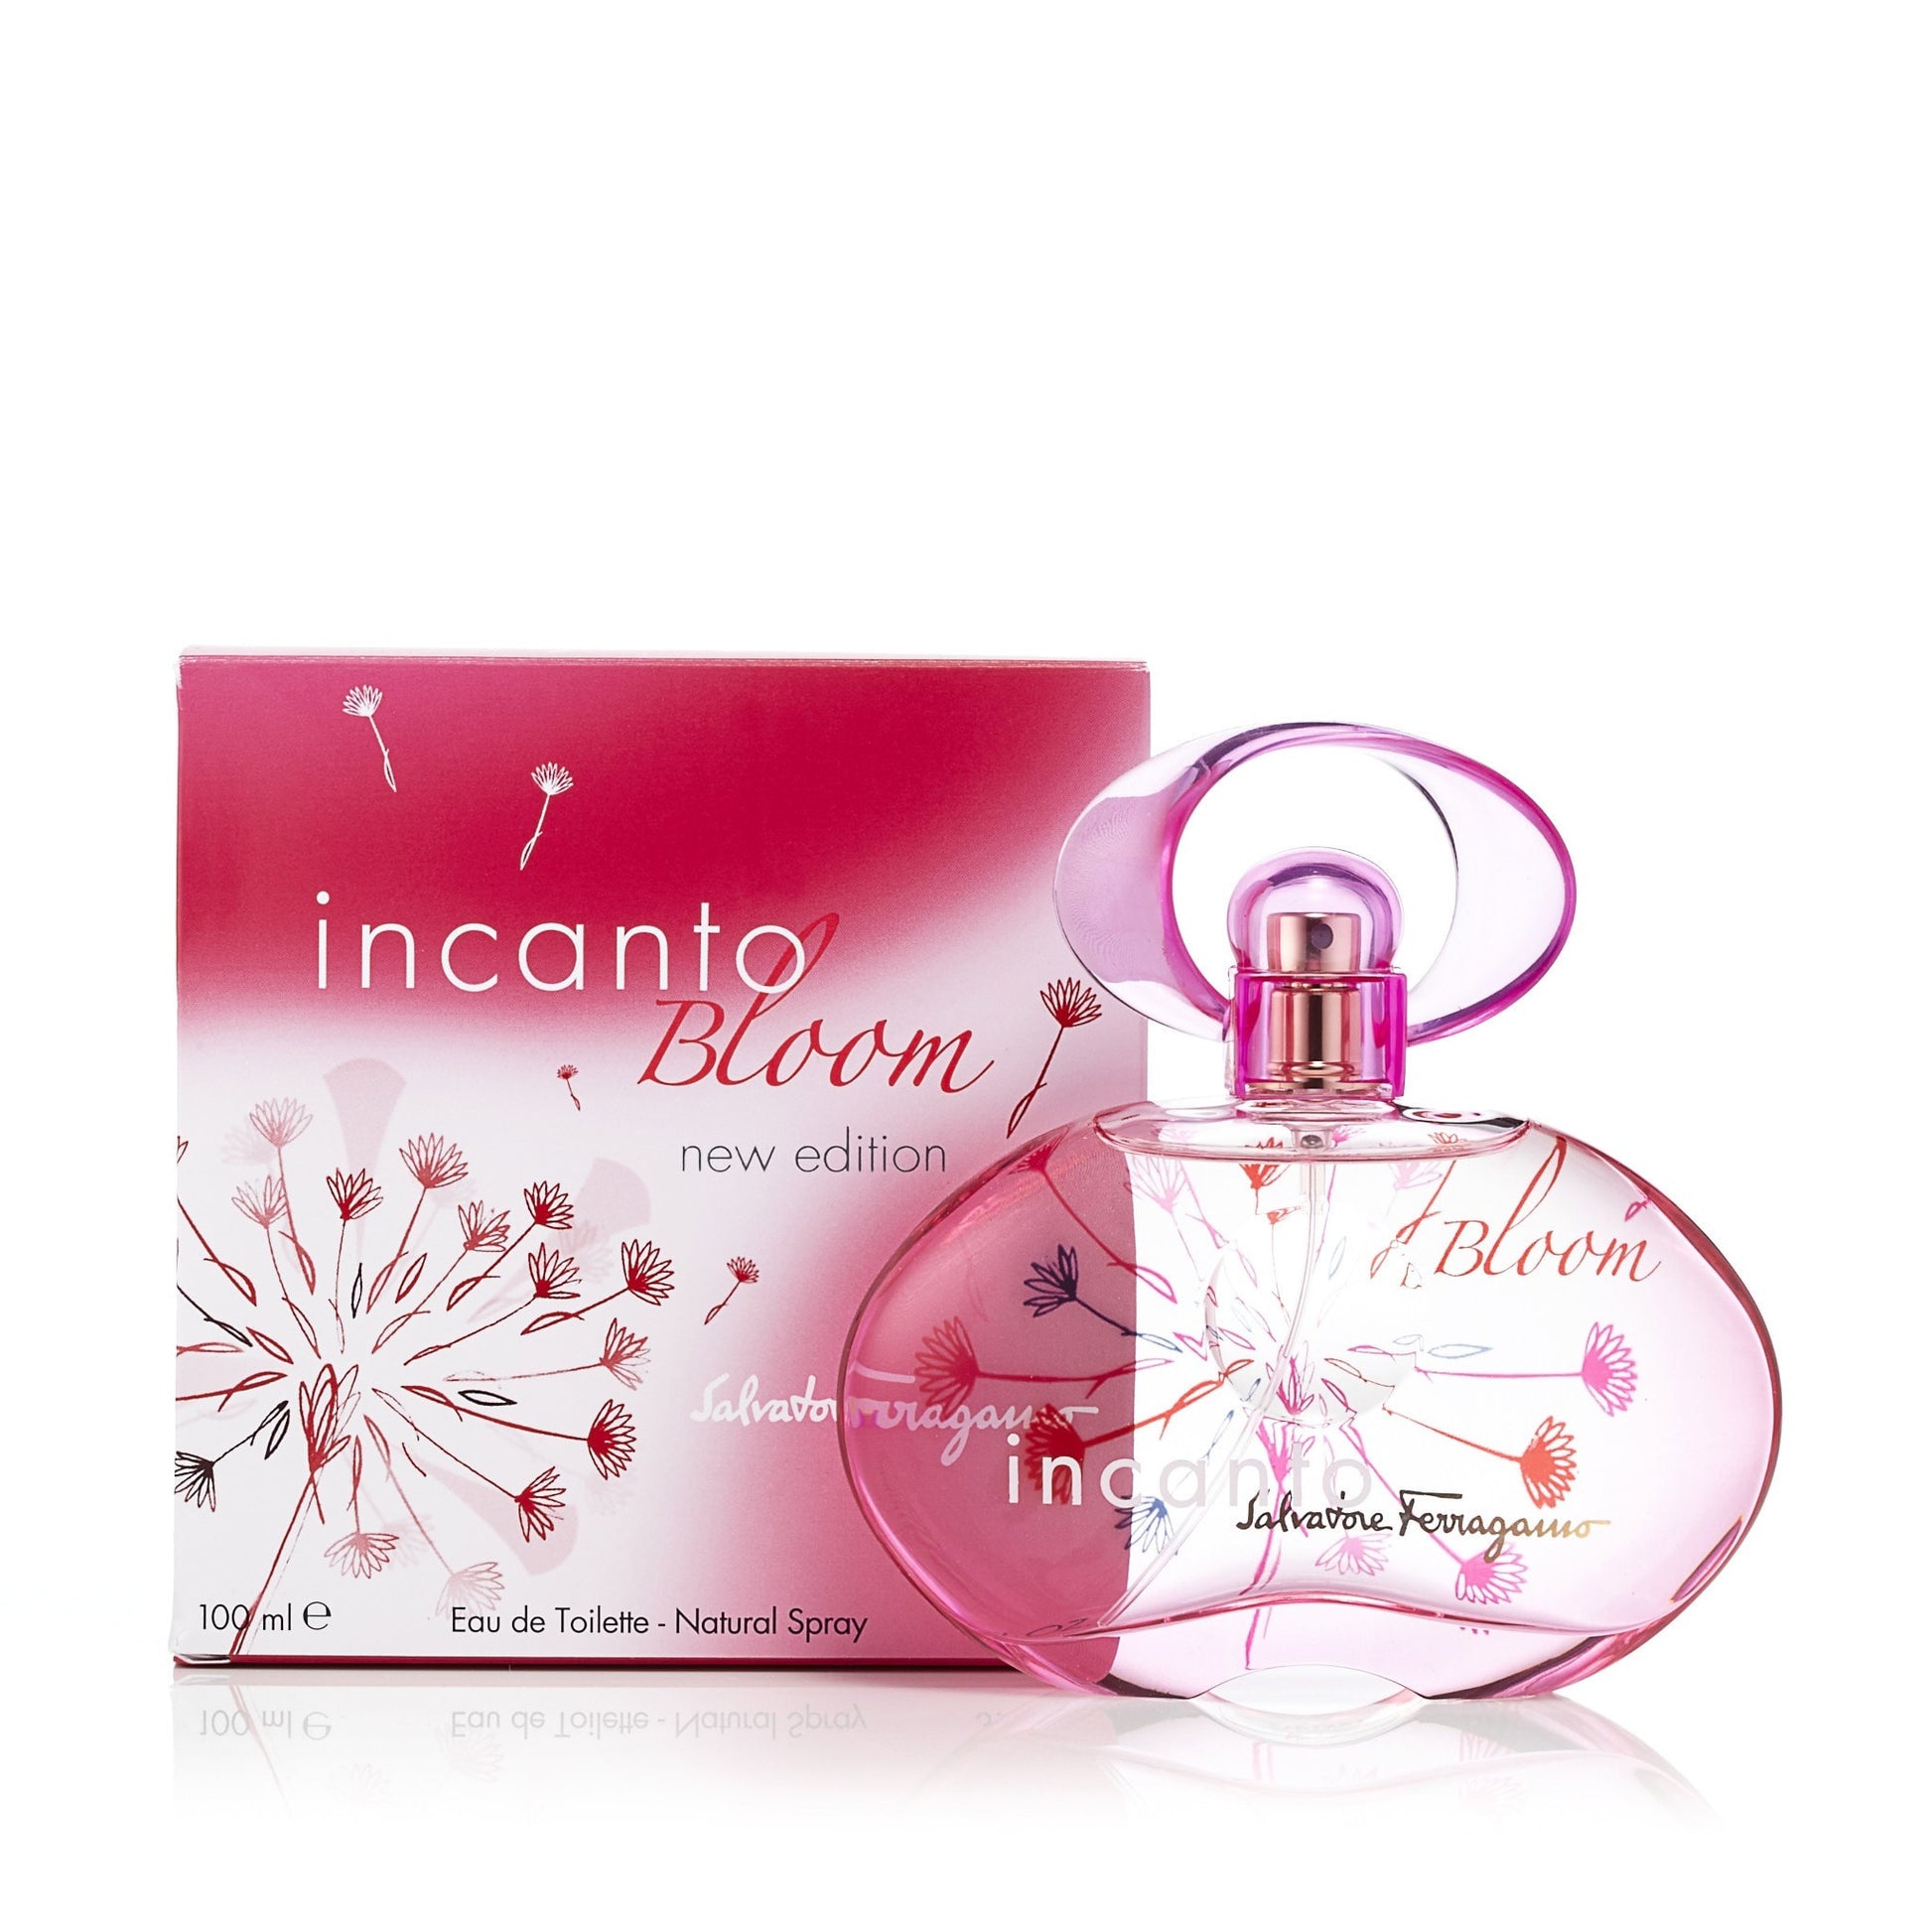  Incanto Bloom Eau de Toilette Spray for Women by Ferragamo 3.4 oz. Click to open in modal